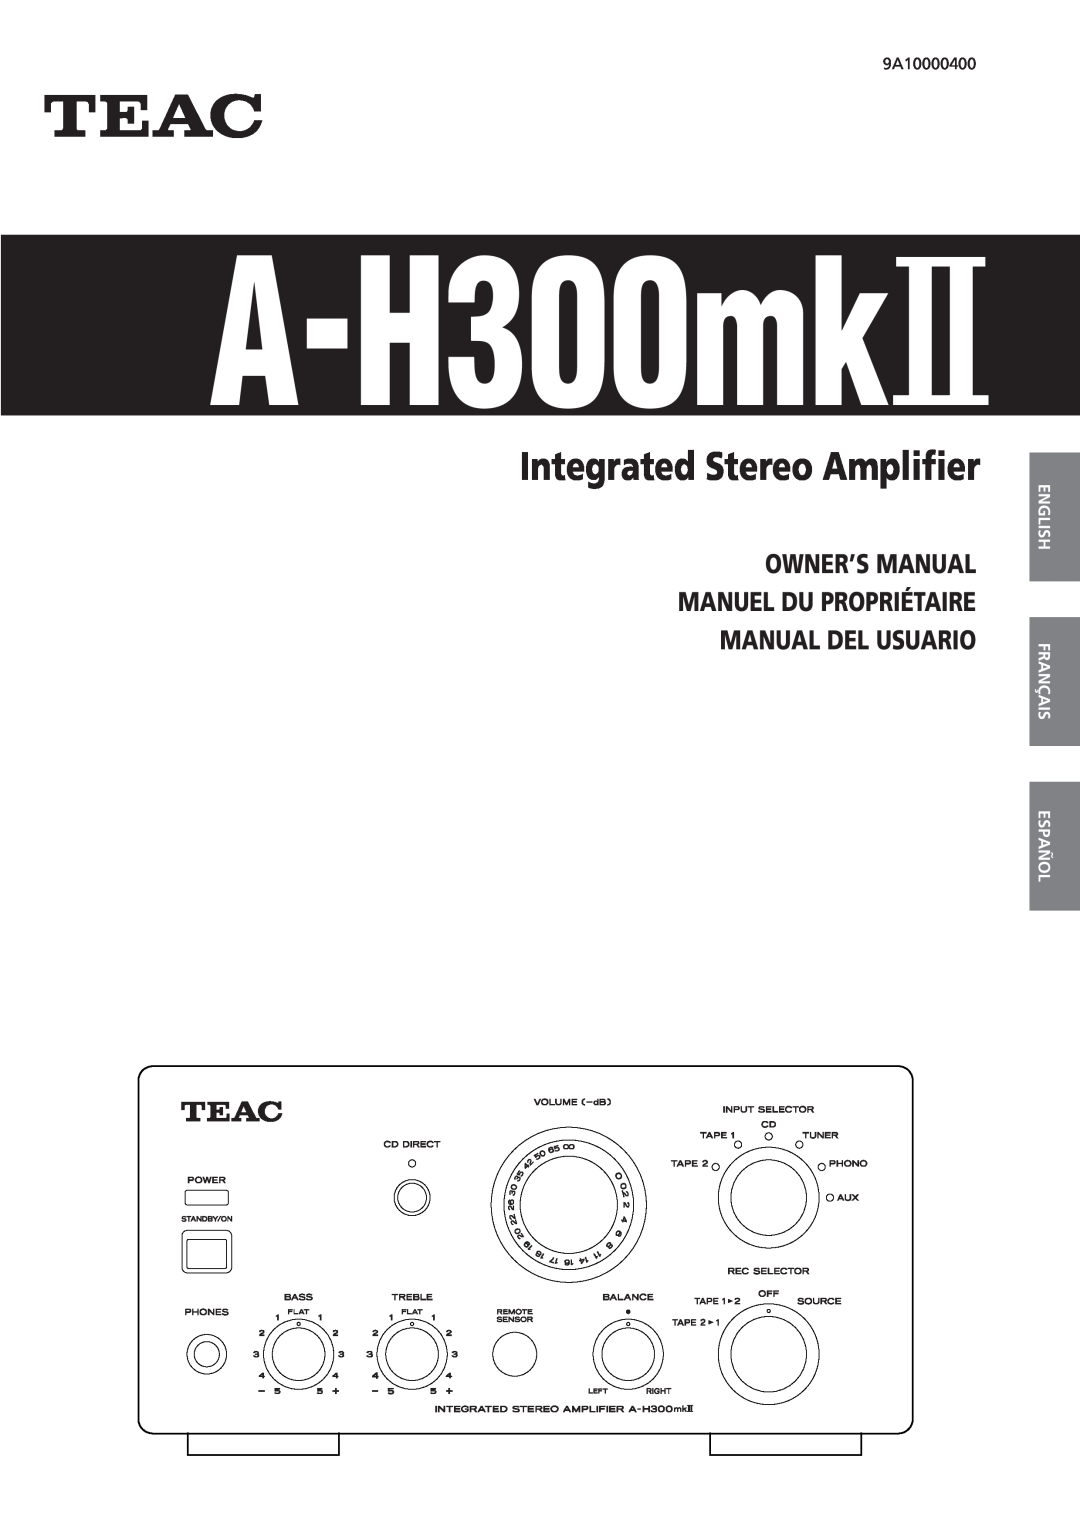 Teac A-H300mkII owner manual English Français Español, A-H300mk@, Integrated Stereo Amplifier, Manual Del Usuario 